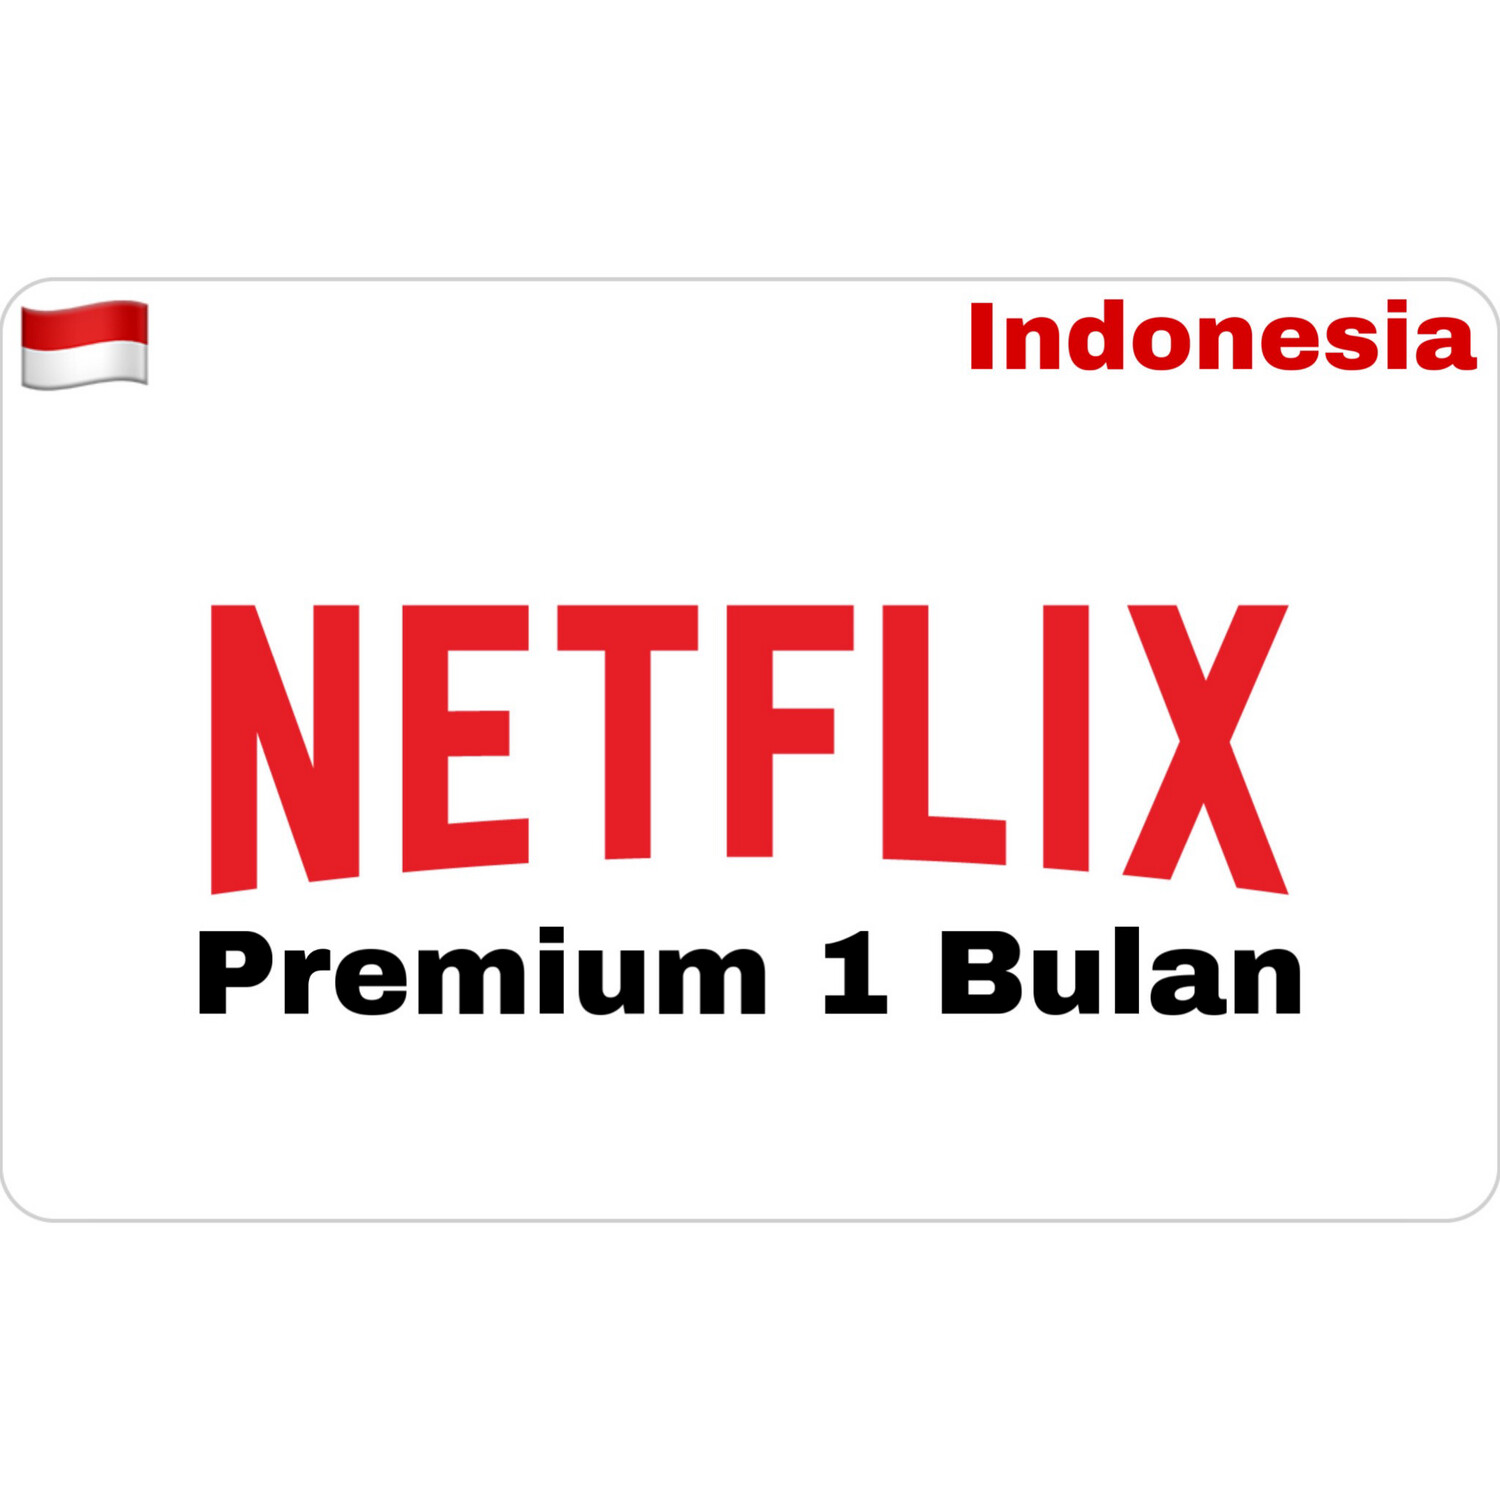 Netflix Premium Gift Card Indonesia 1 Bulan